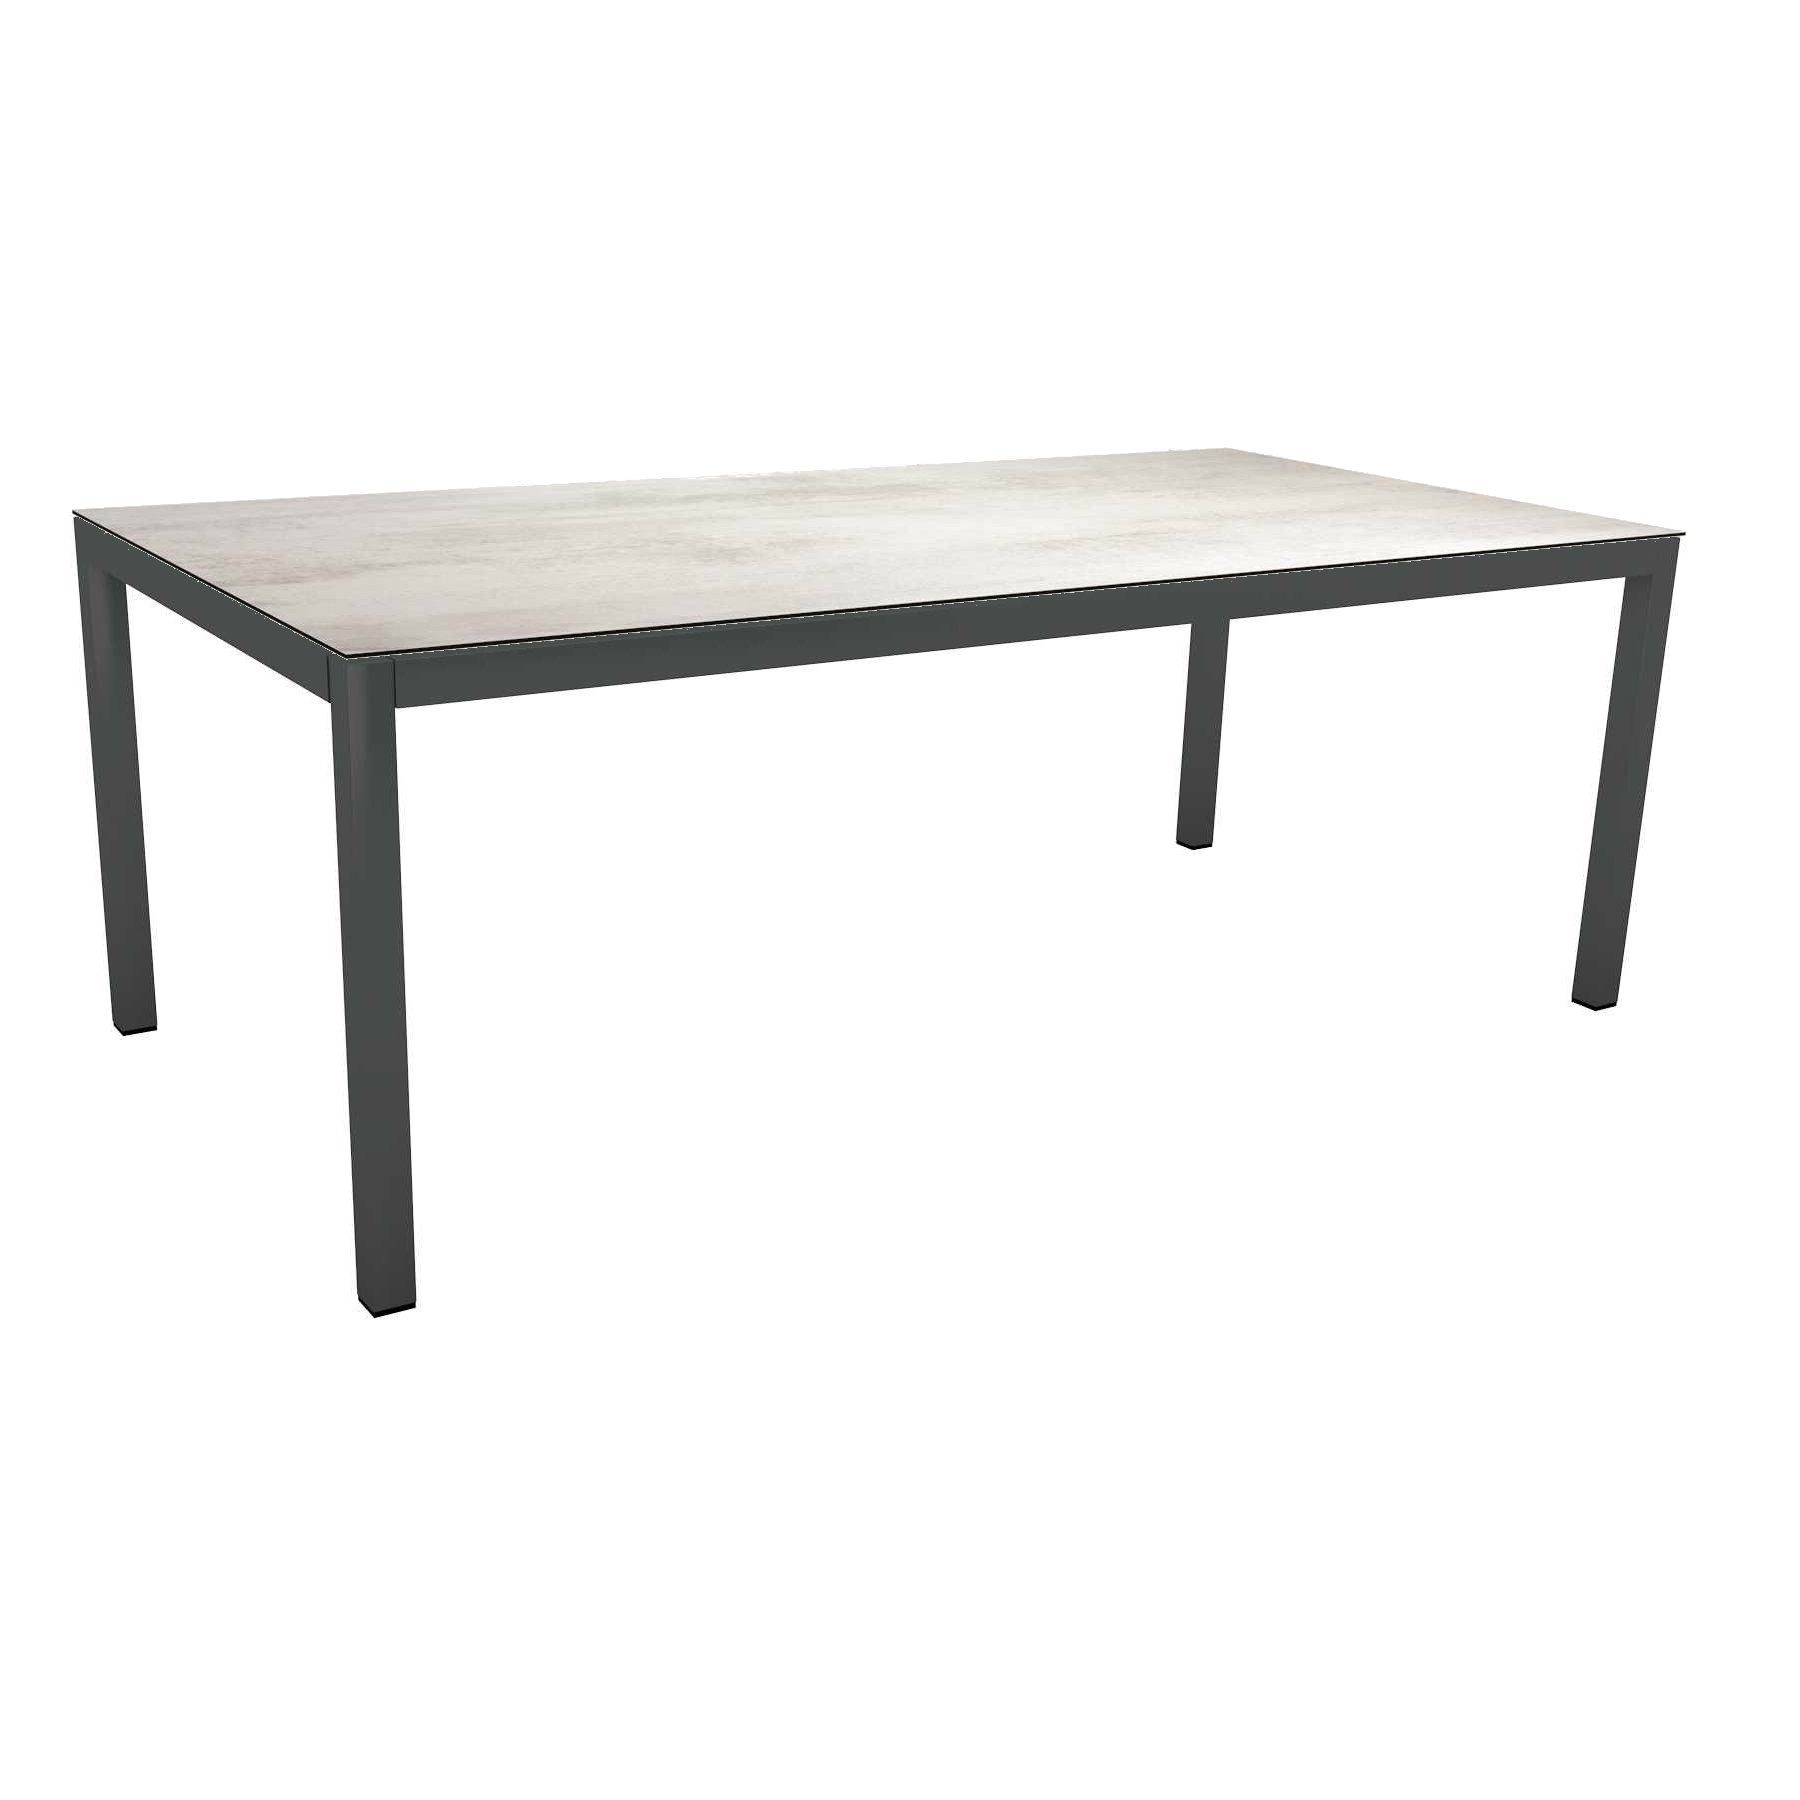 Stern Tischsystem Gartentisch, Gestell Aluminium anthrazit, Tischplatte HPL Zement hell, Maße: 200x100 cm